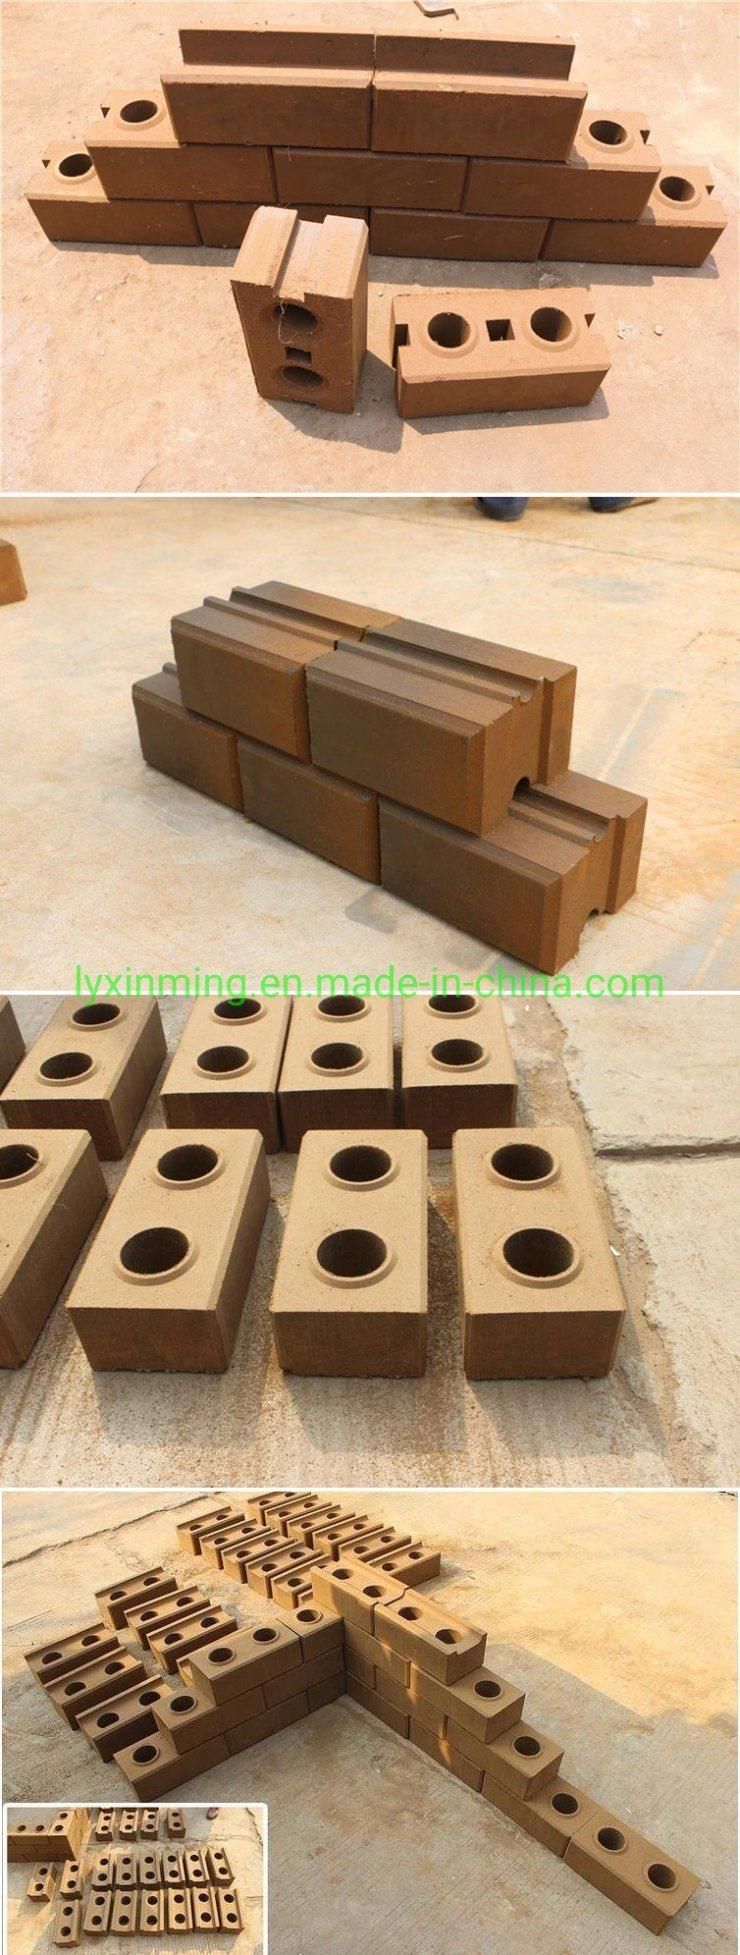 Manual Xm2-40 Clay Mud Brick Making Machine Stabilized Solid Block Making Machine in Pakistan